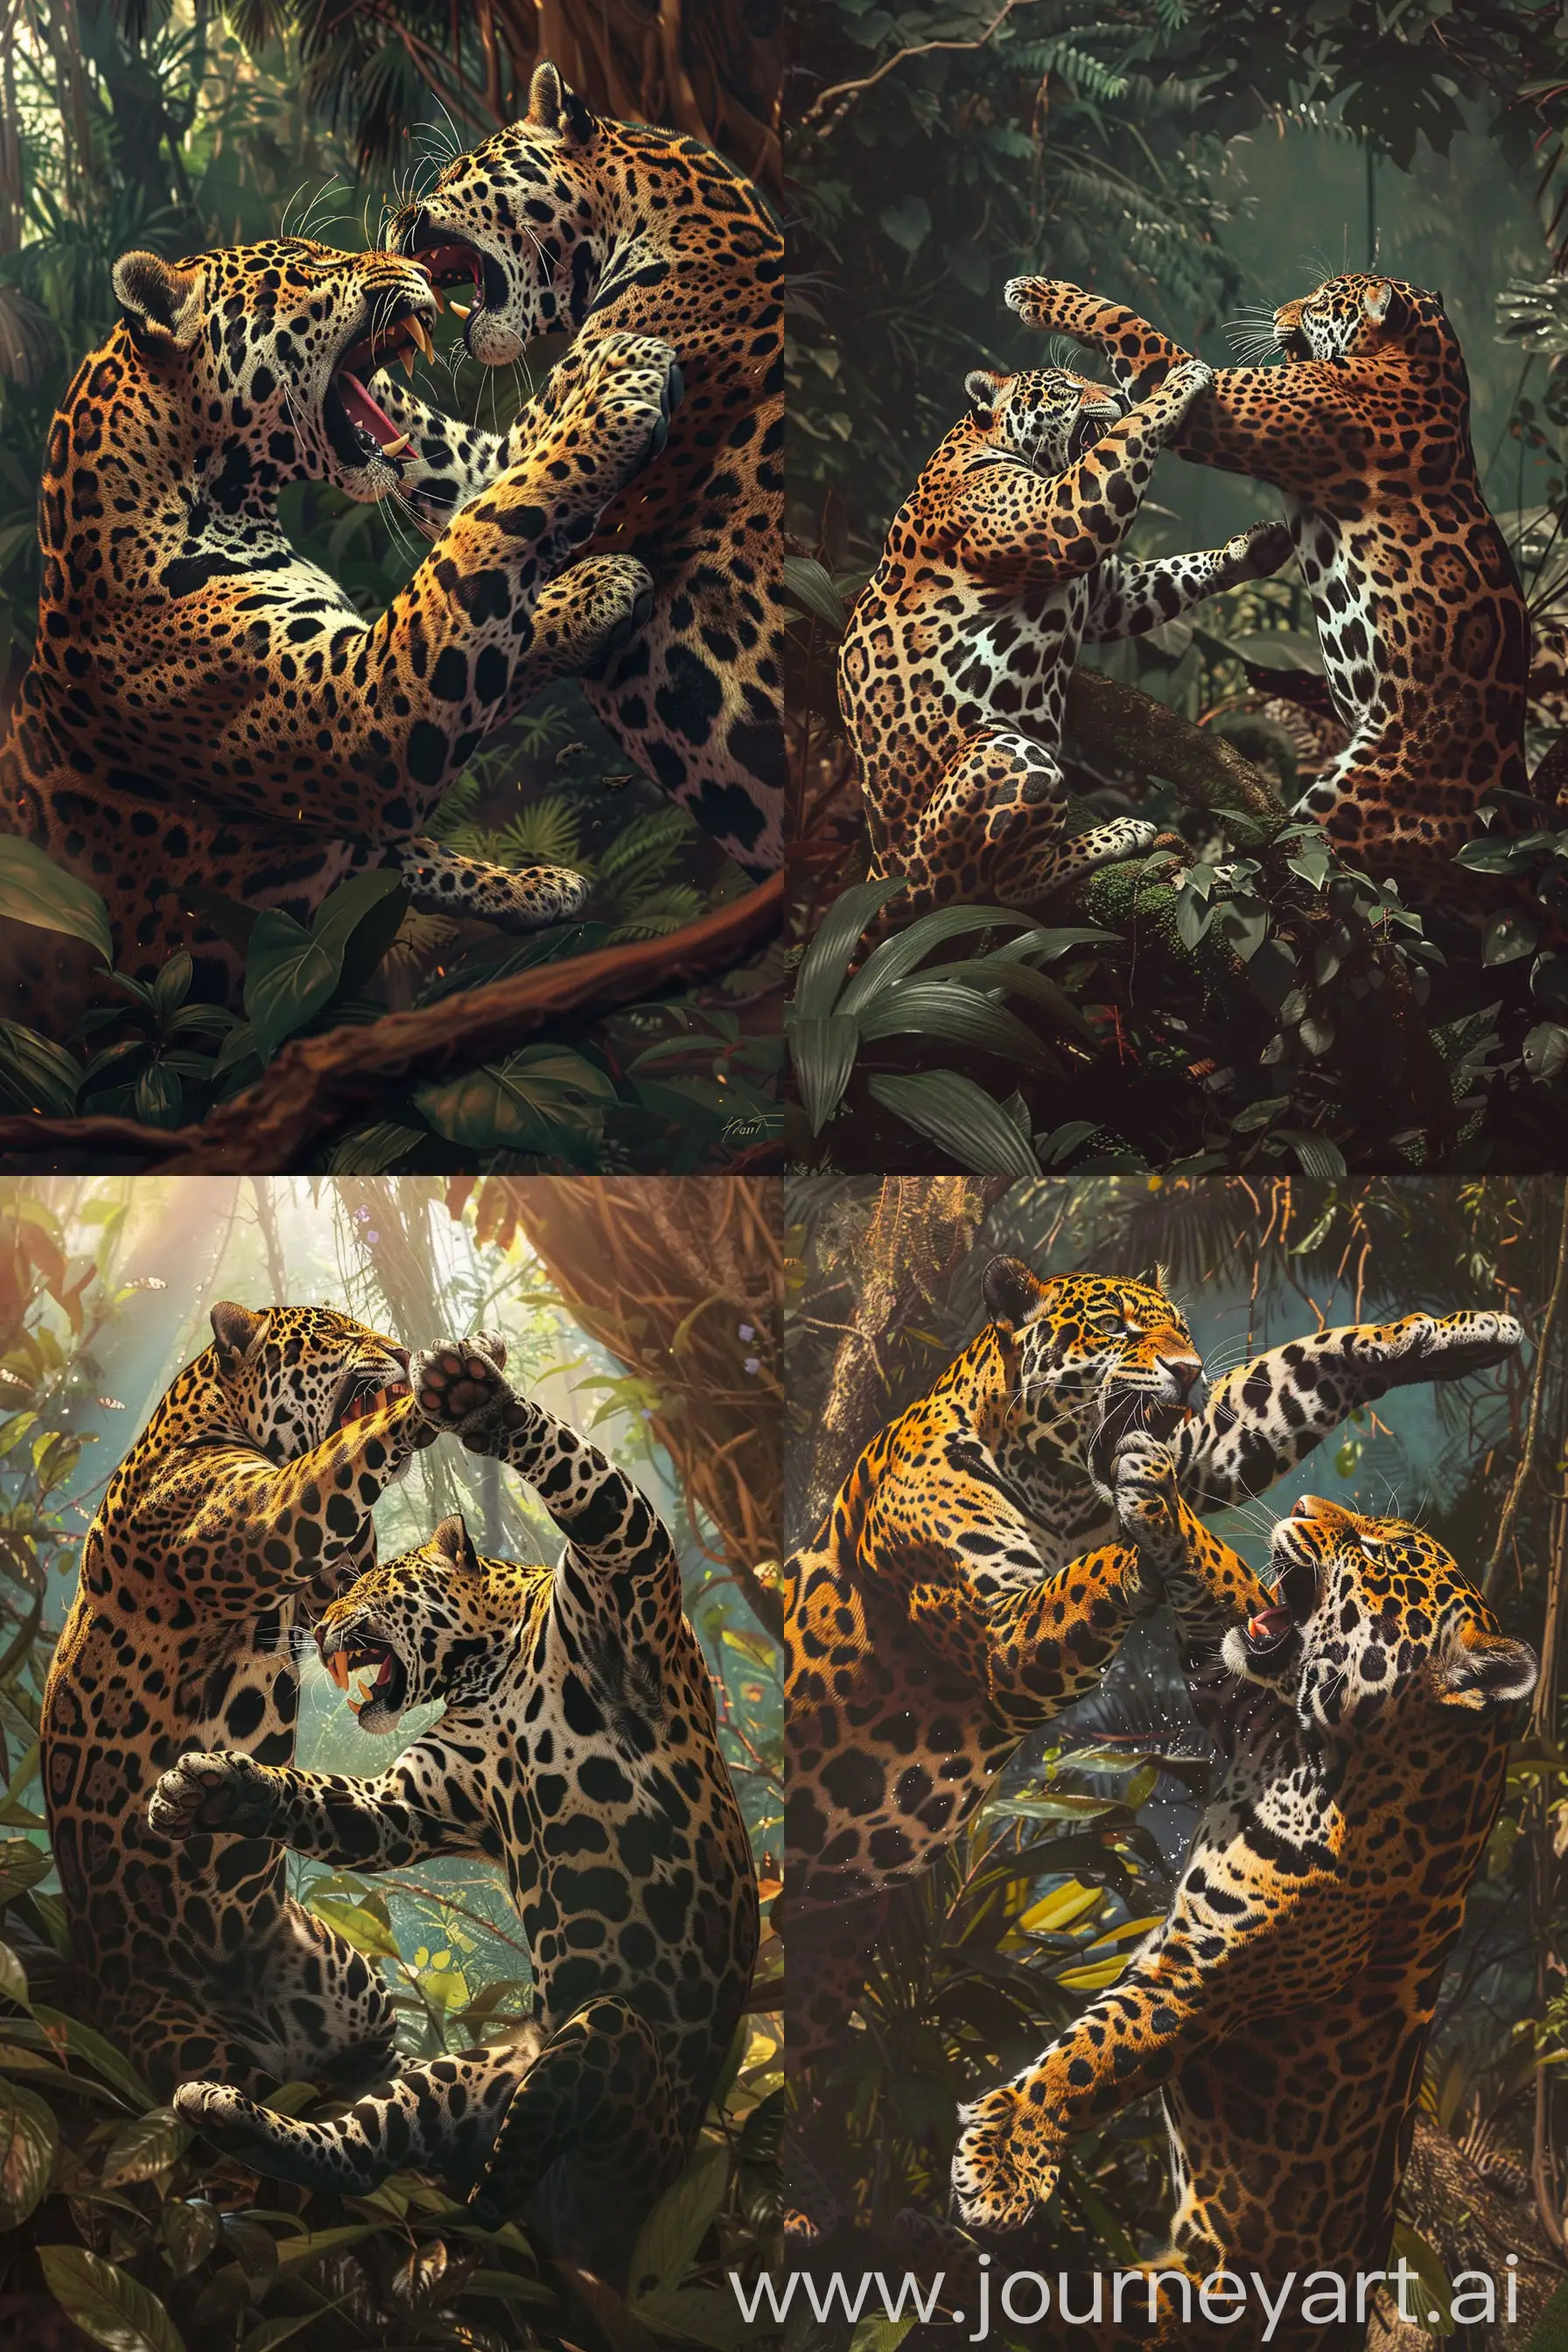 Intense-Jaguar-Duel-in-Vibrant-Jungle-Setting